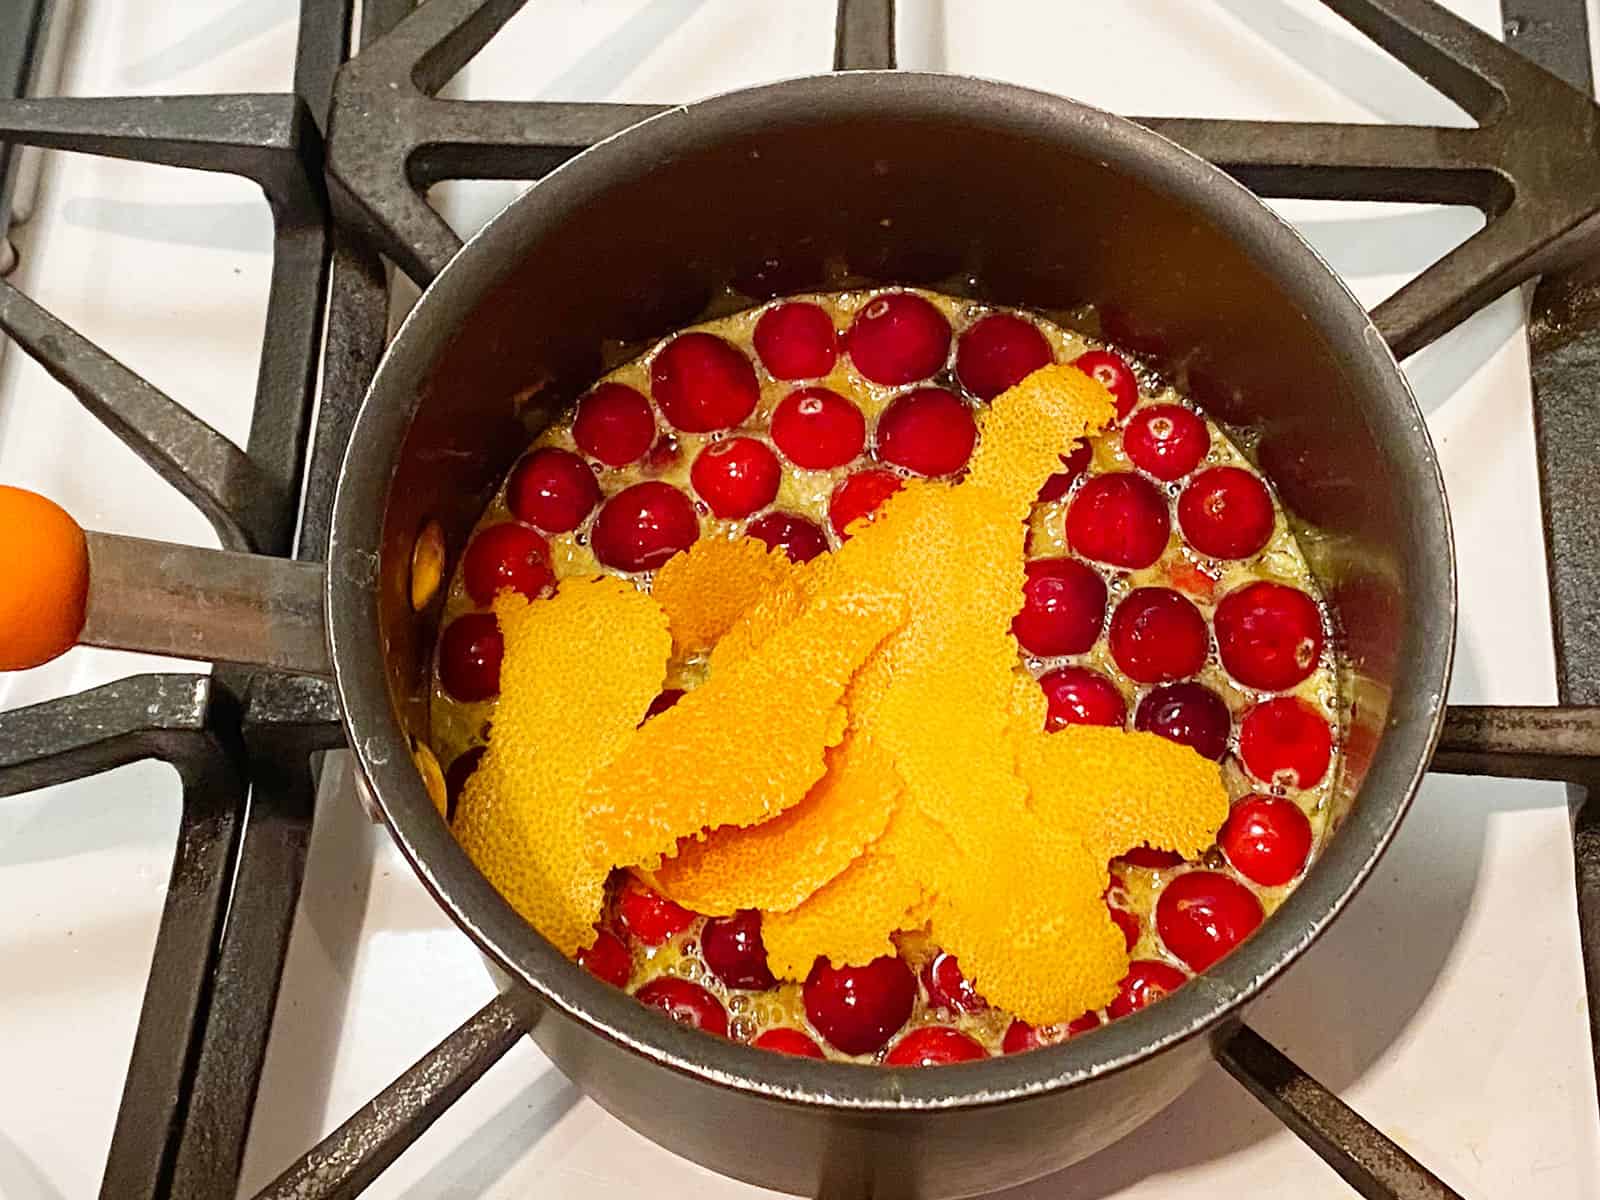 Cranberries, orange peel, sugar and water in a pot.